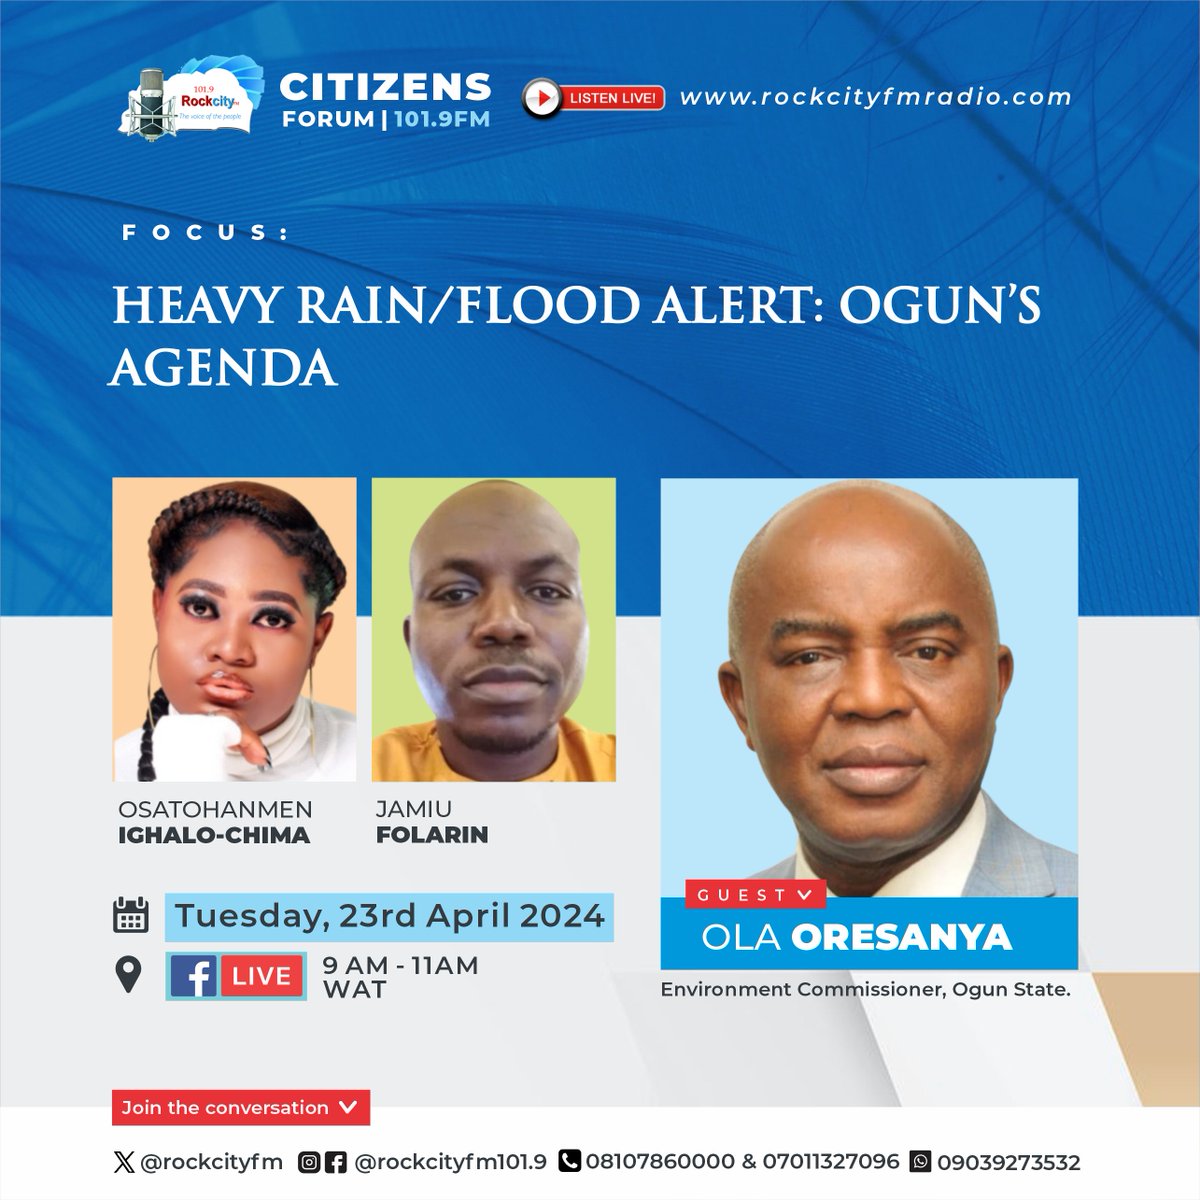 Join us on Tues 23rd, April at 9a.m. on #CitizensForum #DaybreakShow

FOCUS: HEAVY RAIN/FLOOD ALERT: OGUN'S AGENDA

Guest: Ola Oresanya 

Hosts:   @_radiopepper & @GERMANEO

Live: rockcityfmradio.com

#flood #HeavyRainfall #ogunstate